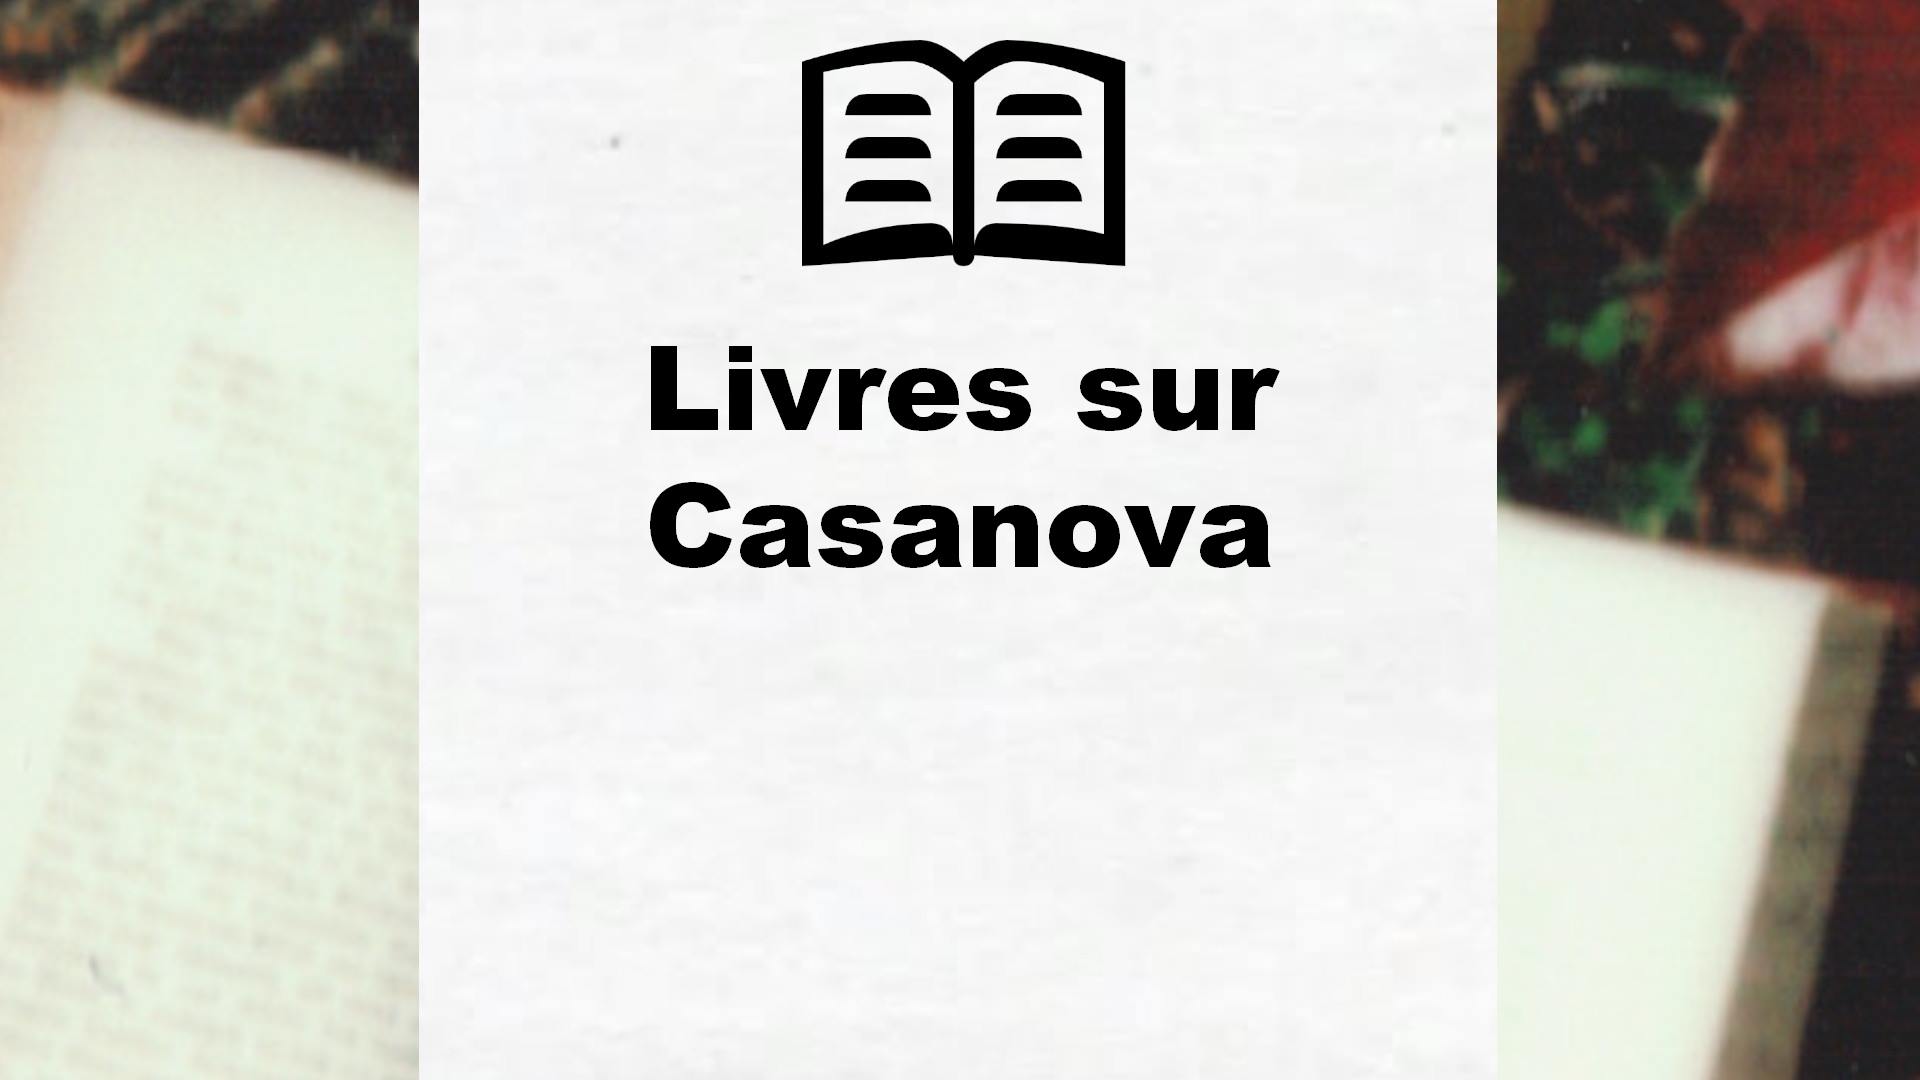 Livres sur Casanova